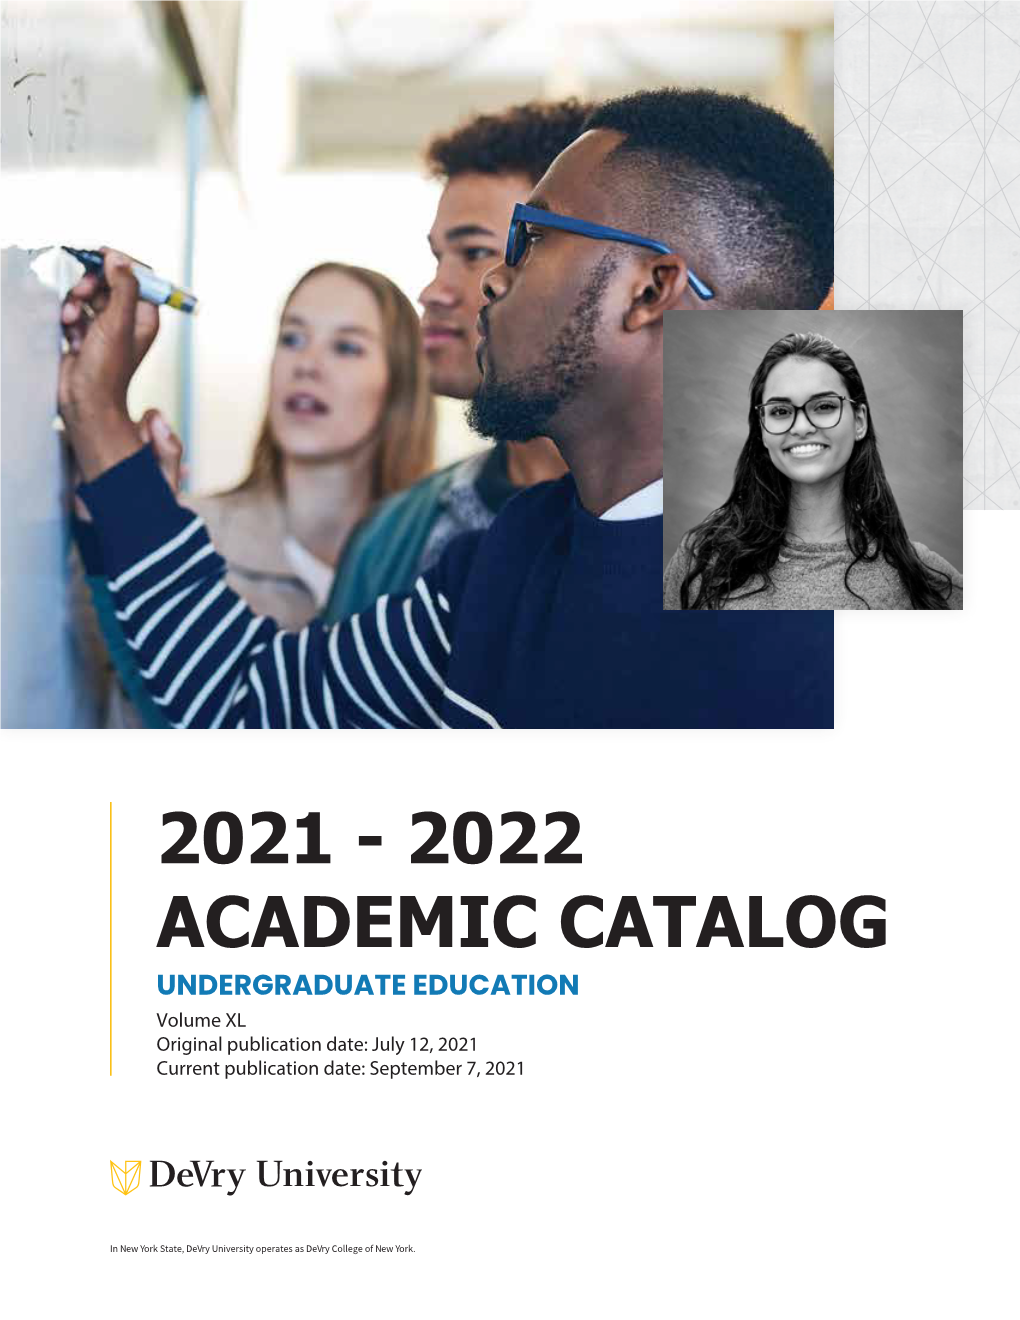 2021 - 2022 ACADEMIC CATALOG UNDERGRADUATE EDUCATION Volume XL Original Publication Date: July 12, 2021 Current Publication Date: September 7, 2021